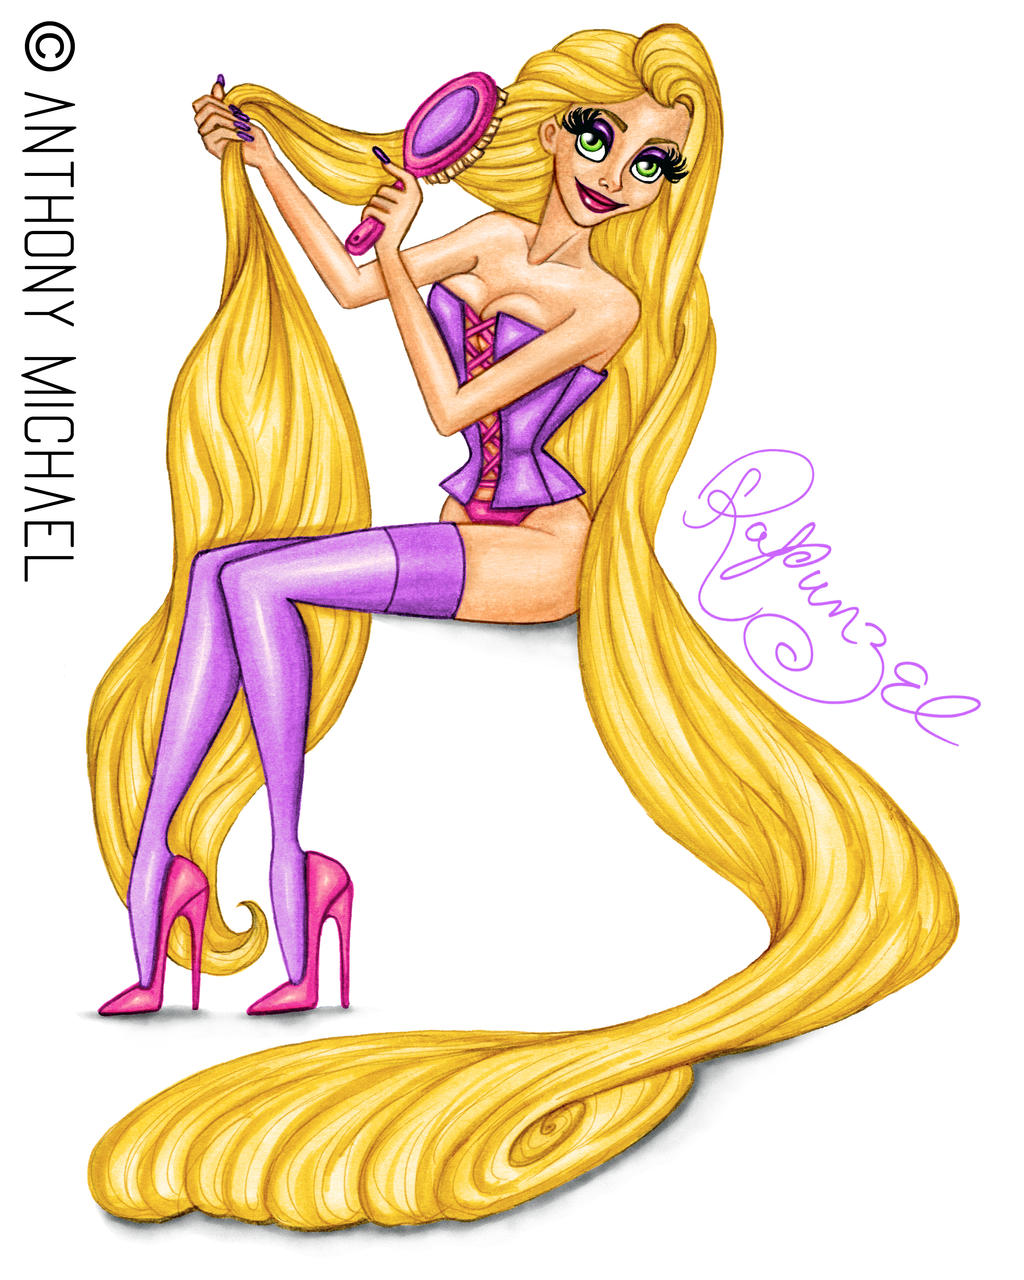 Disney 'PinUp' Princess, Rapunzel by Anth0nyM1cha3l on